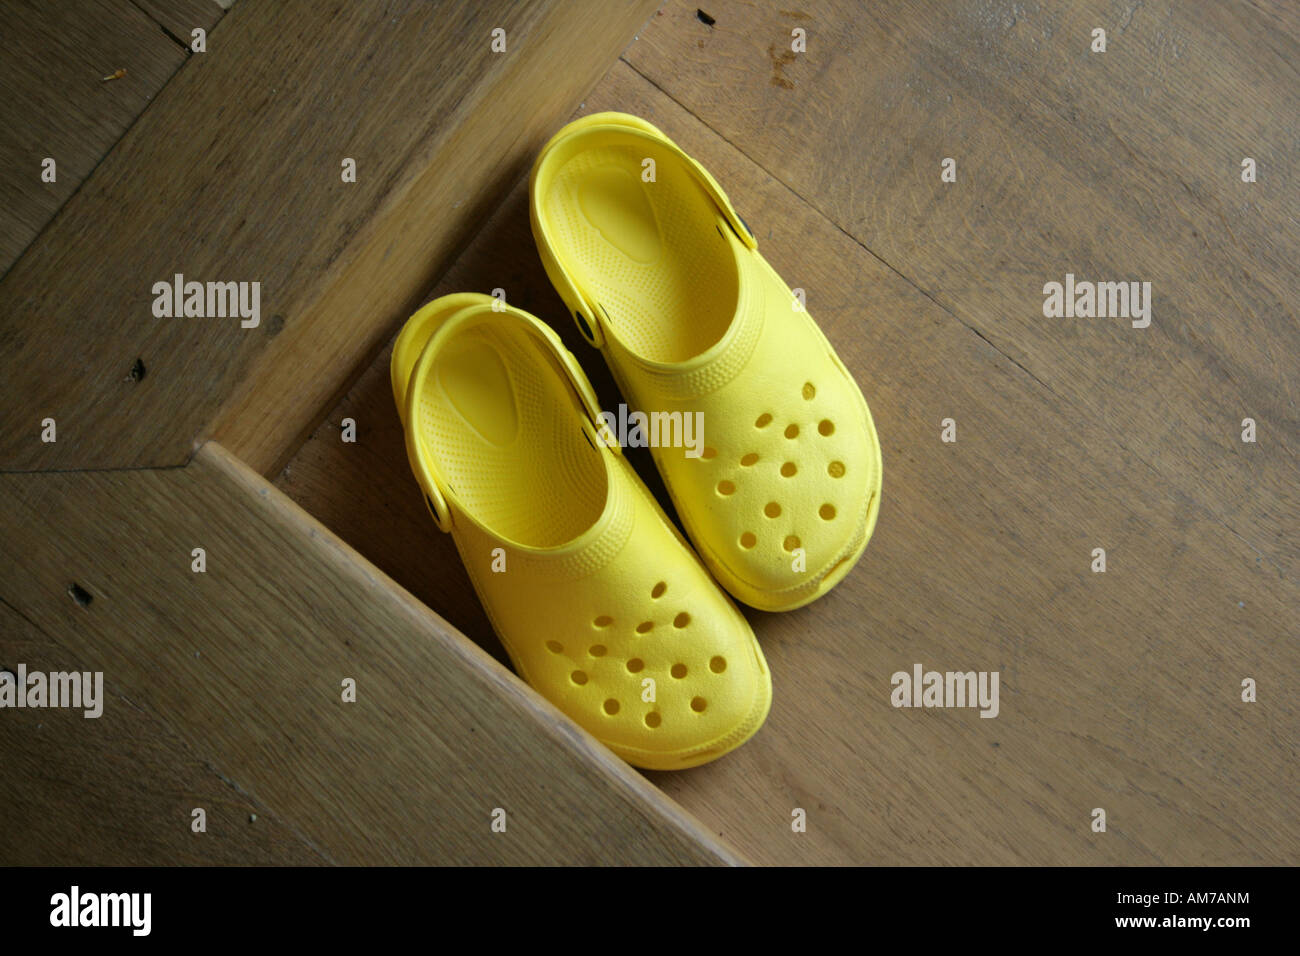 Crocs on wooden floor Stock Photo - Alamy